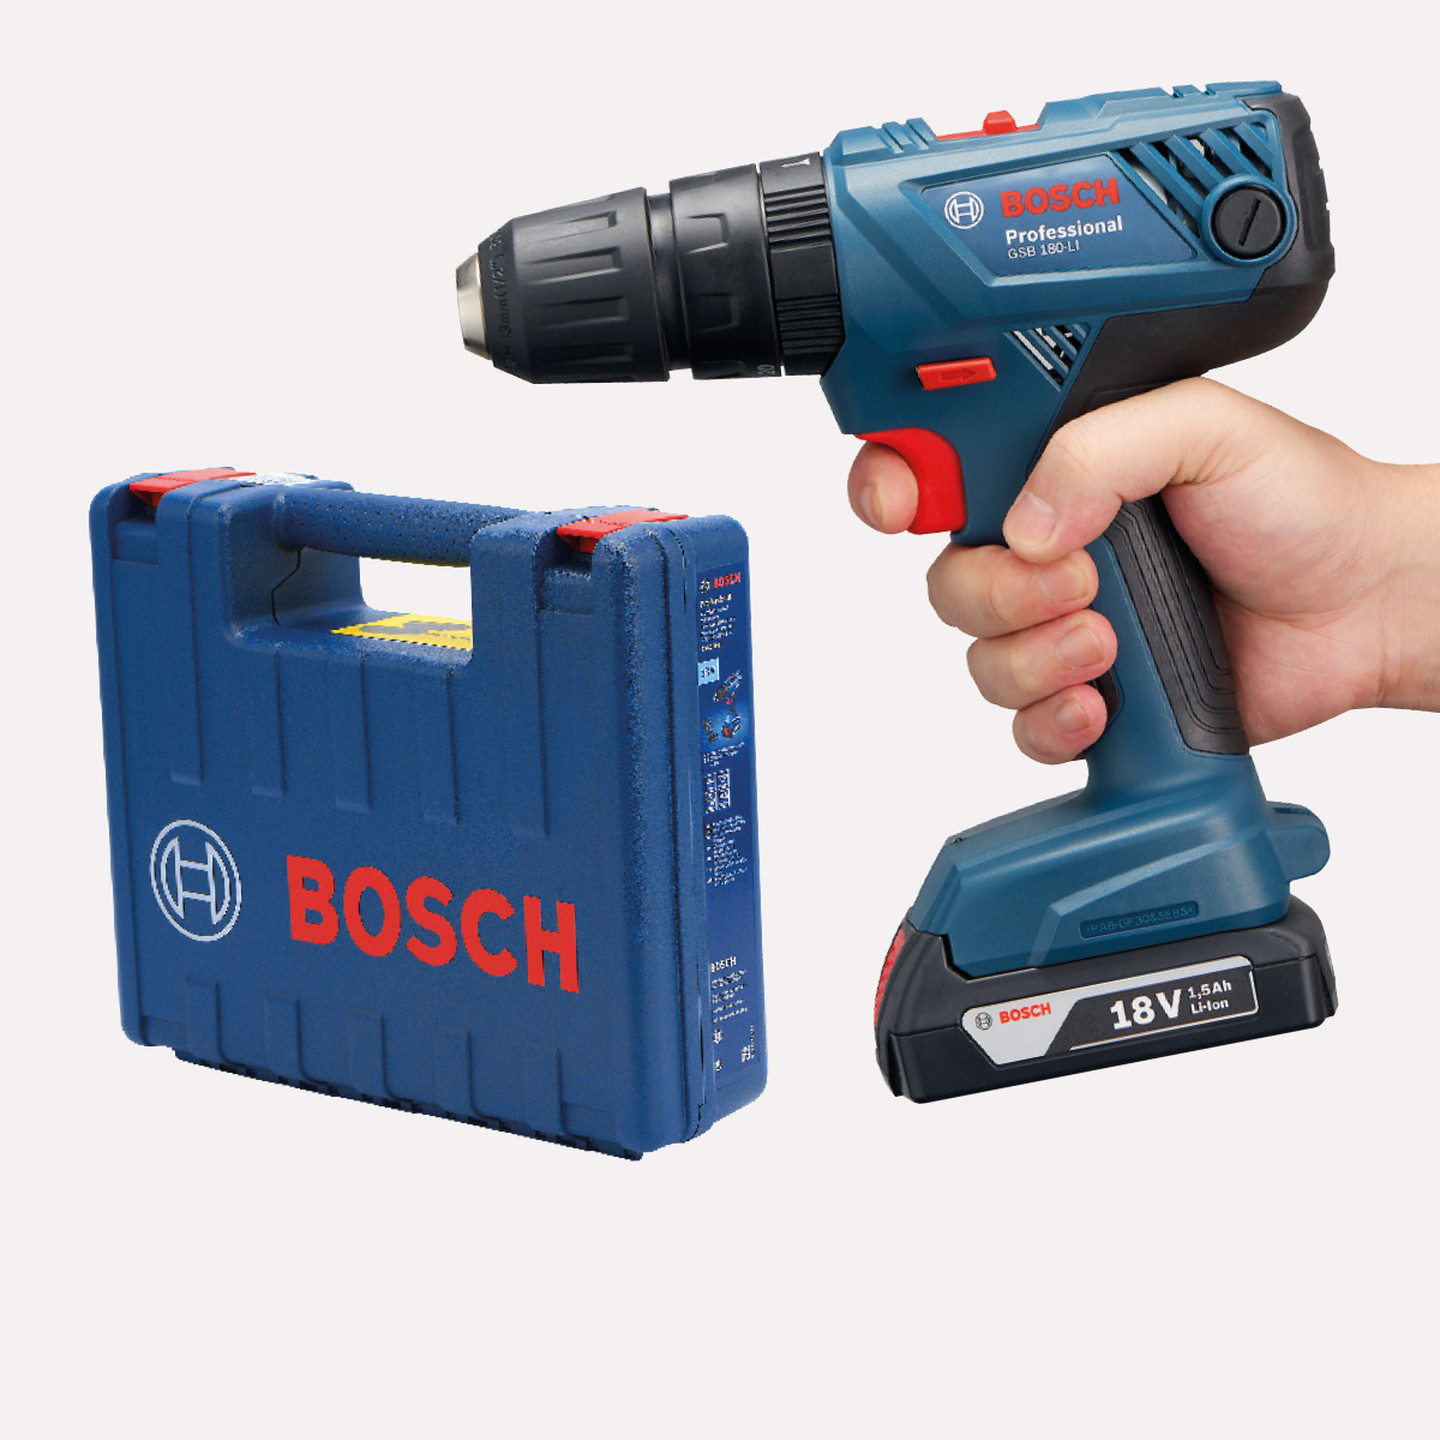 Bosch gsr 180 купить. Bosch GSB 180-li. Bosch GSR 180-li. Bosch 18v-330c. Дрель Bosch professional GSB 180 li.